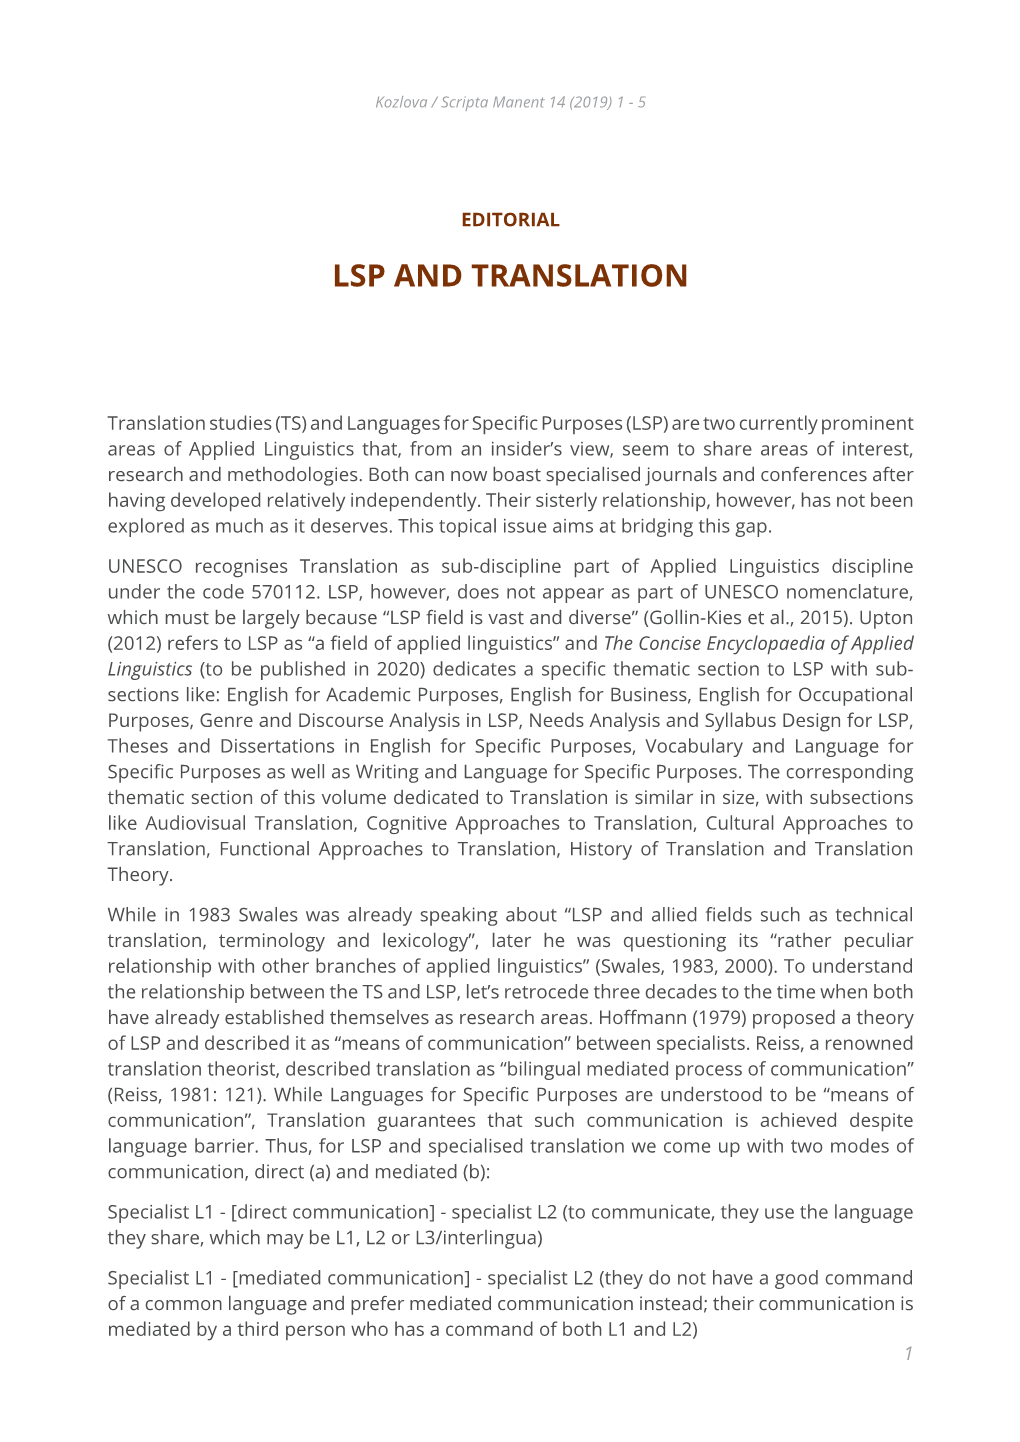 Lsp and Translation